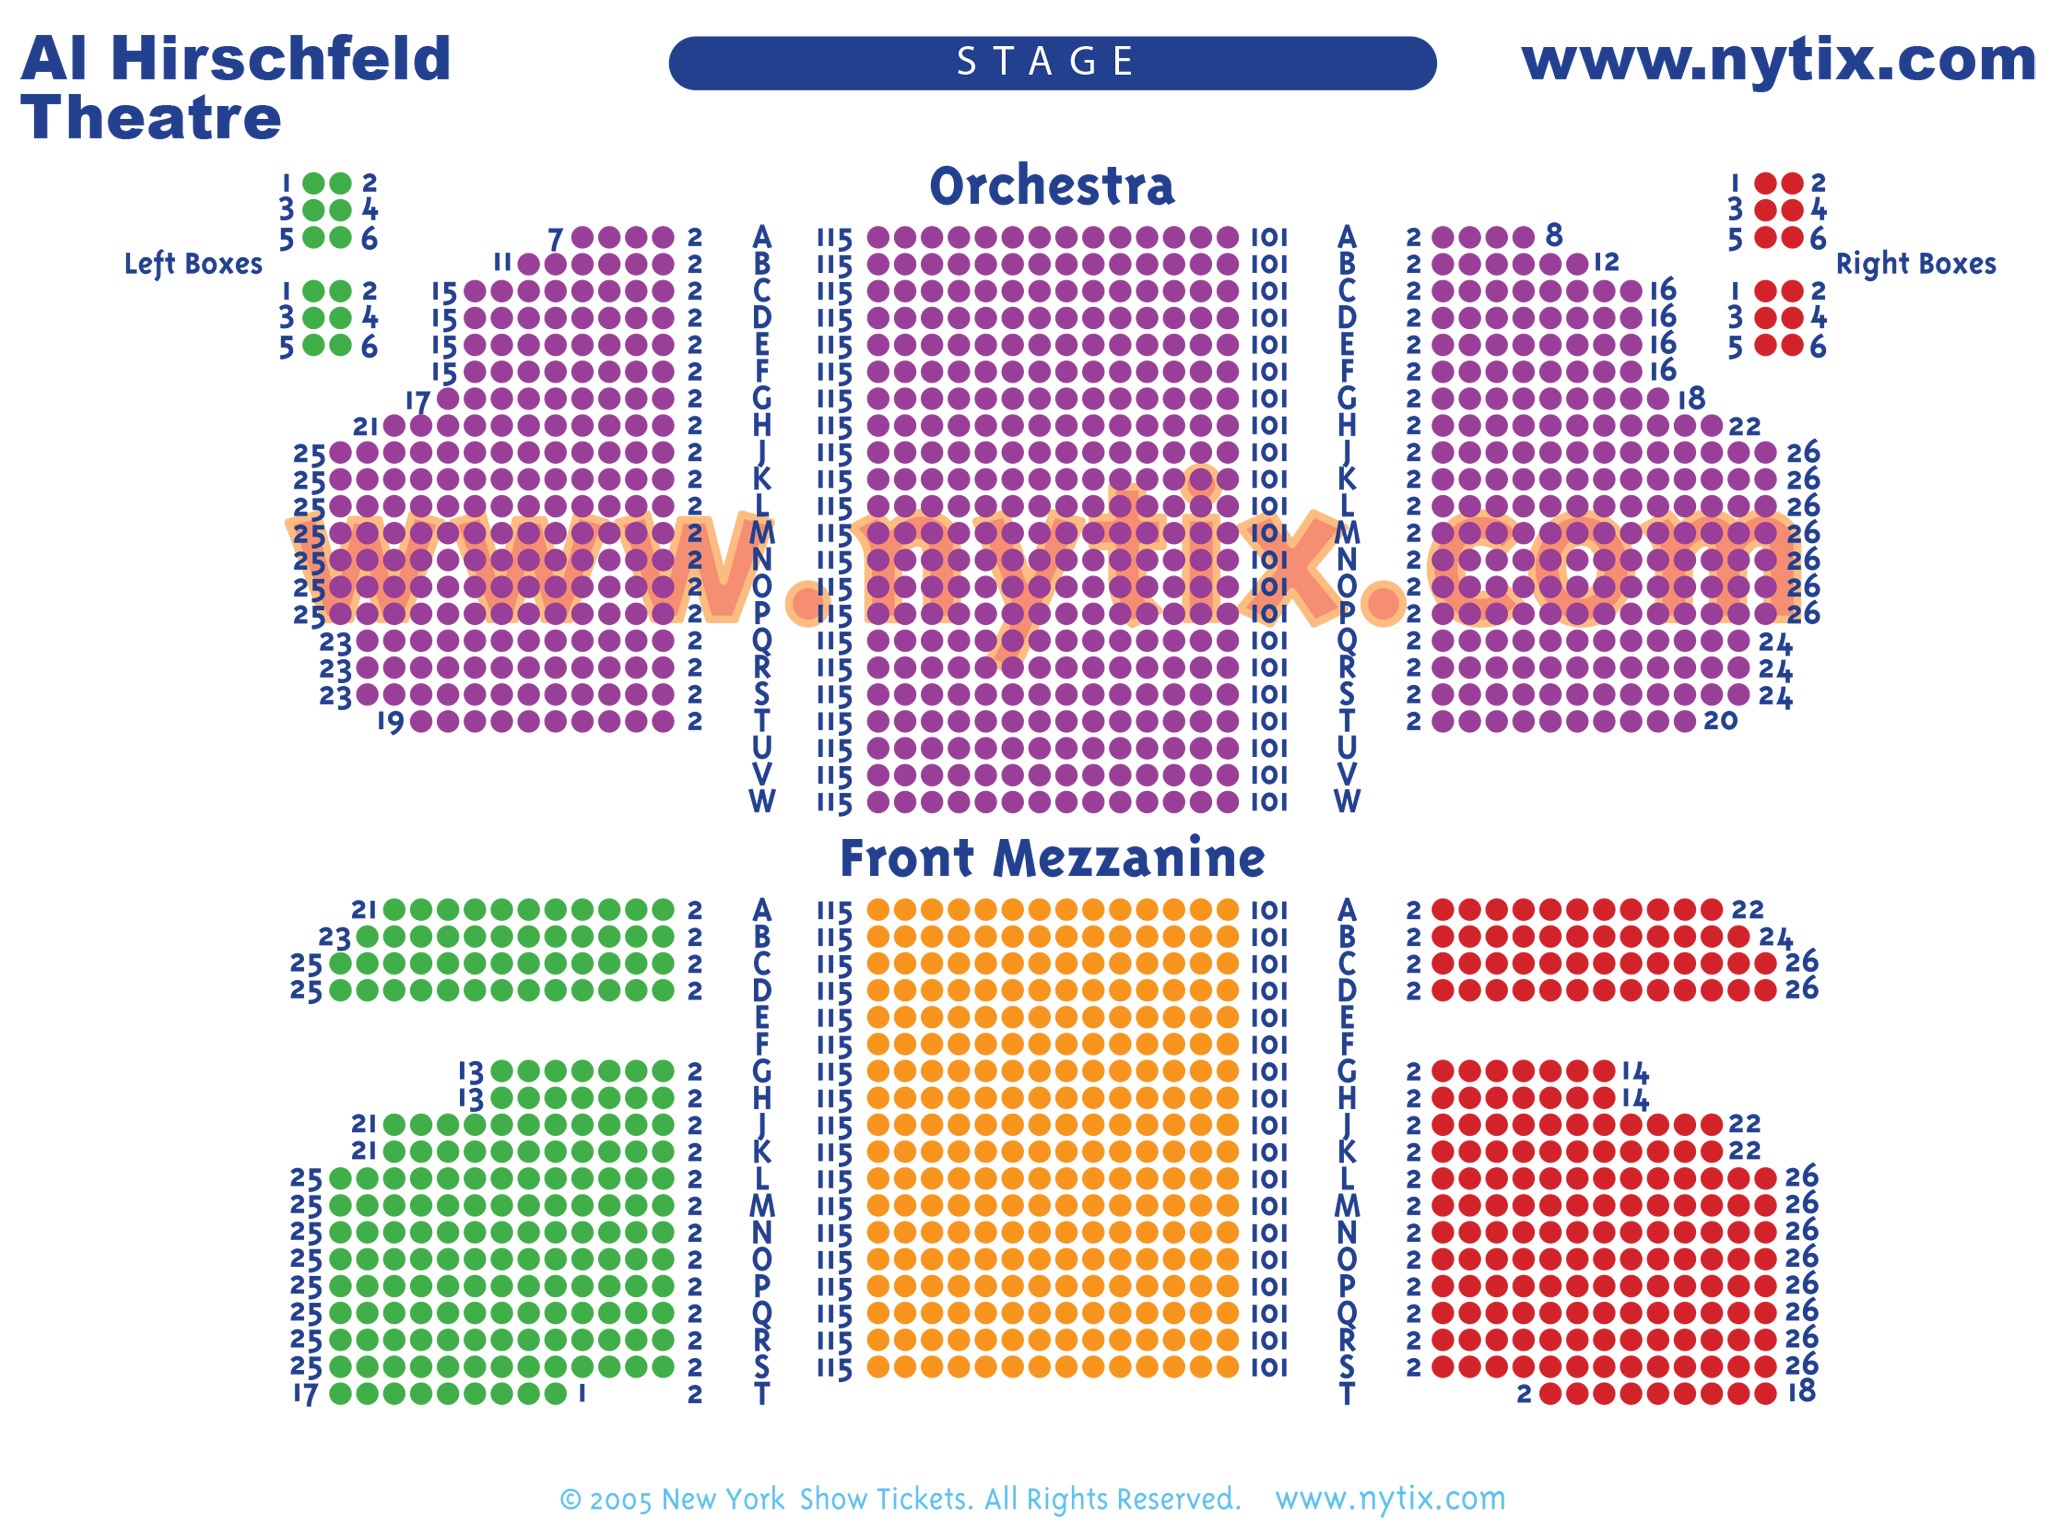 Al Hirschfeld Theatre Seating Chart